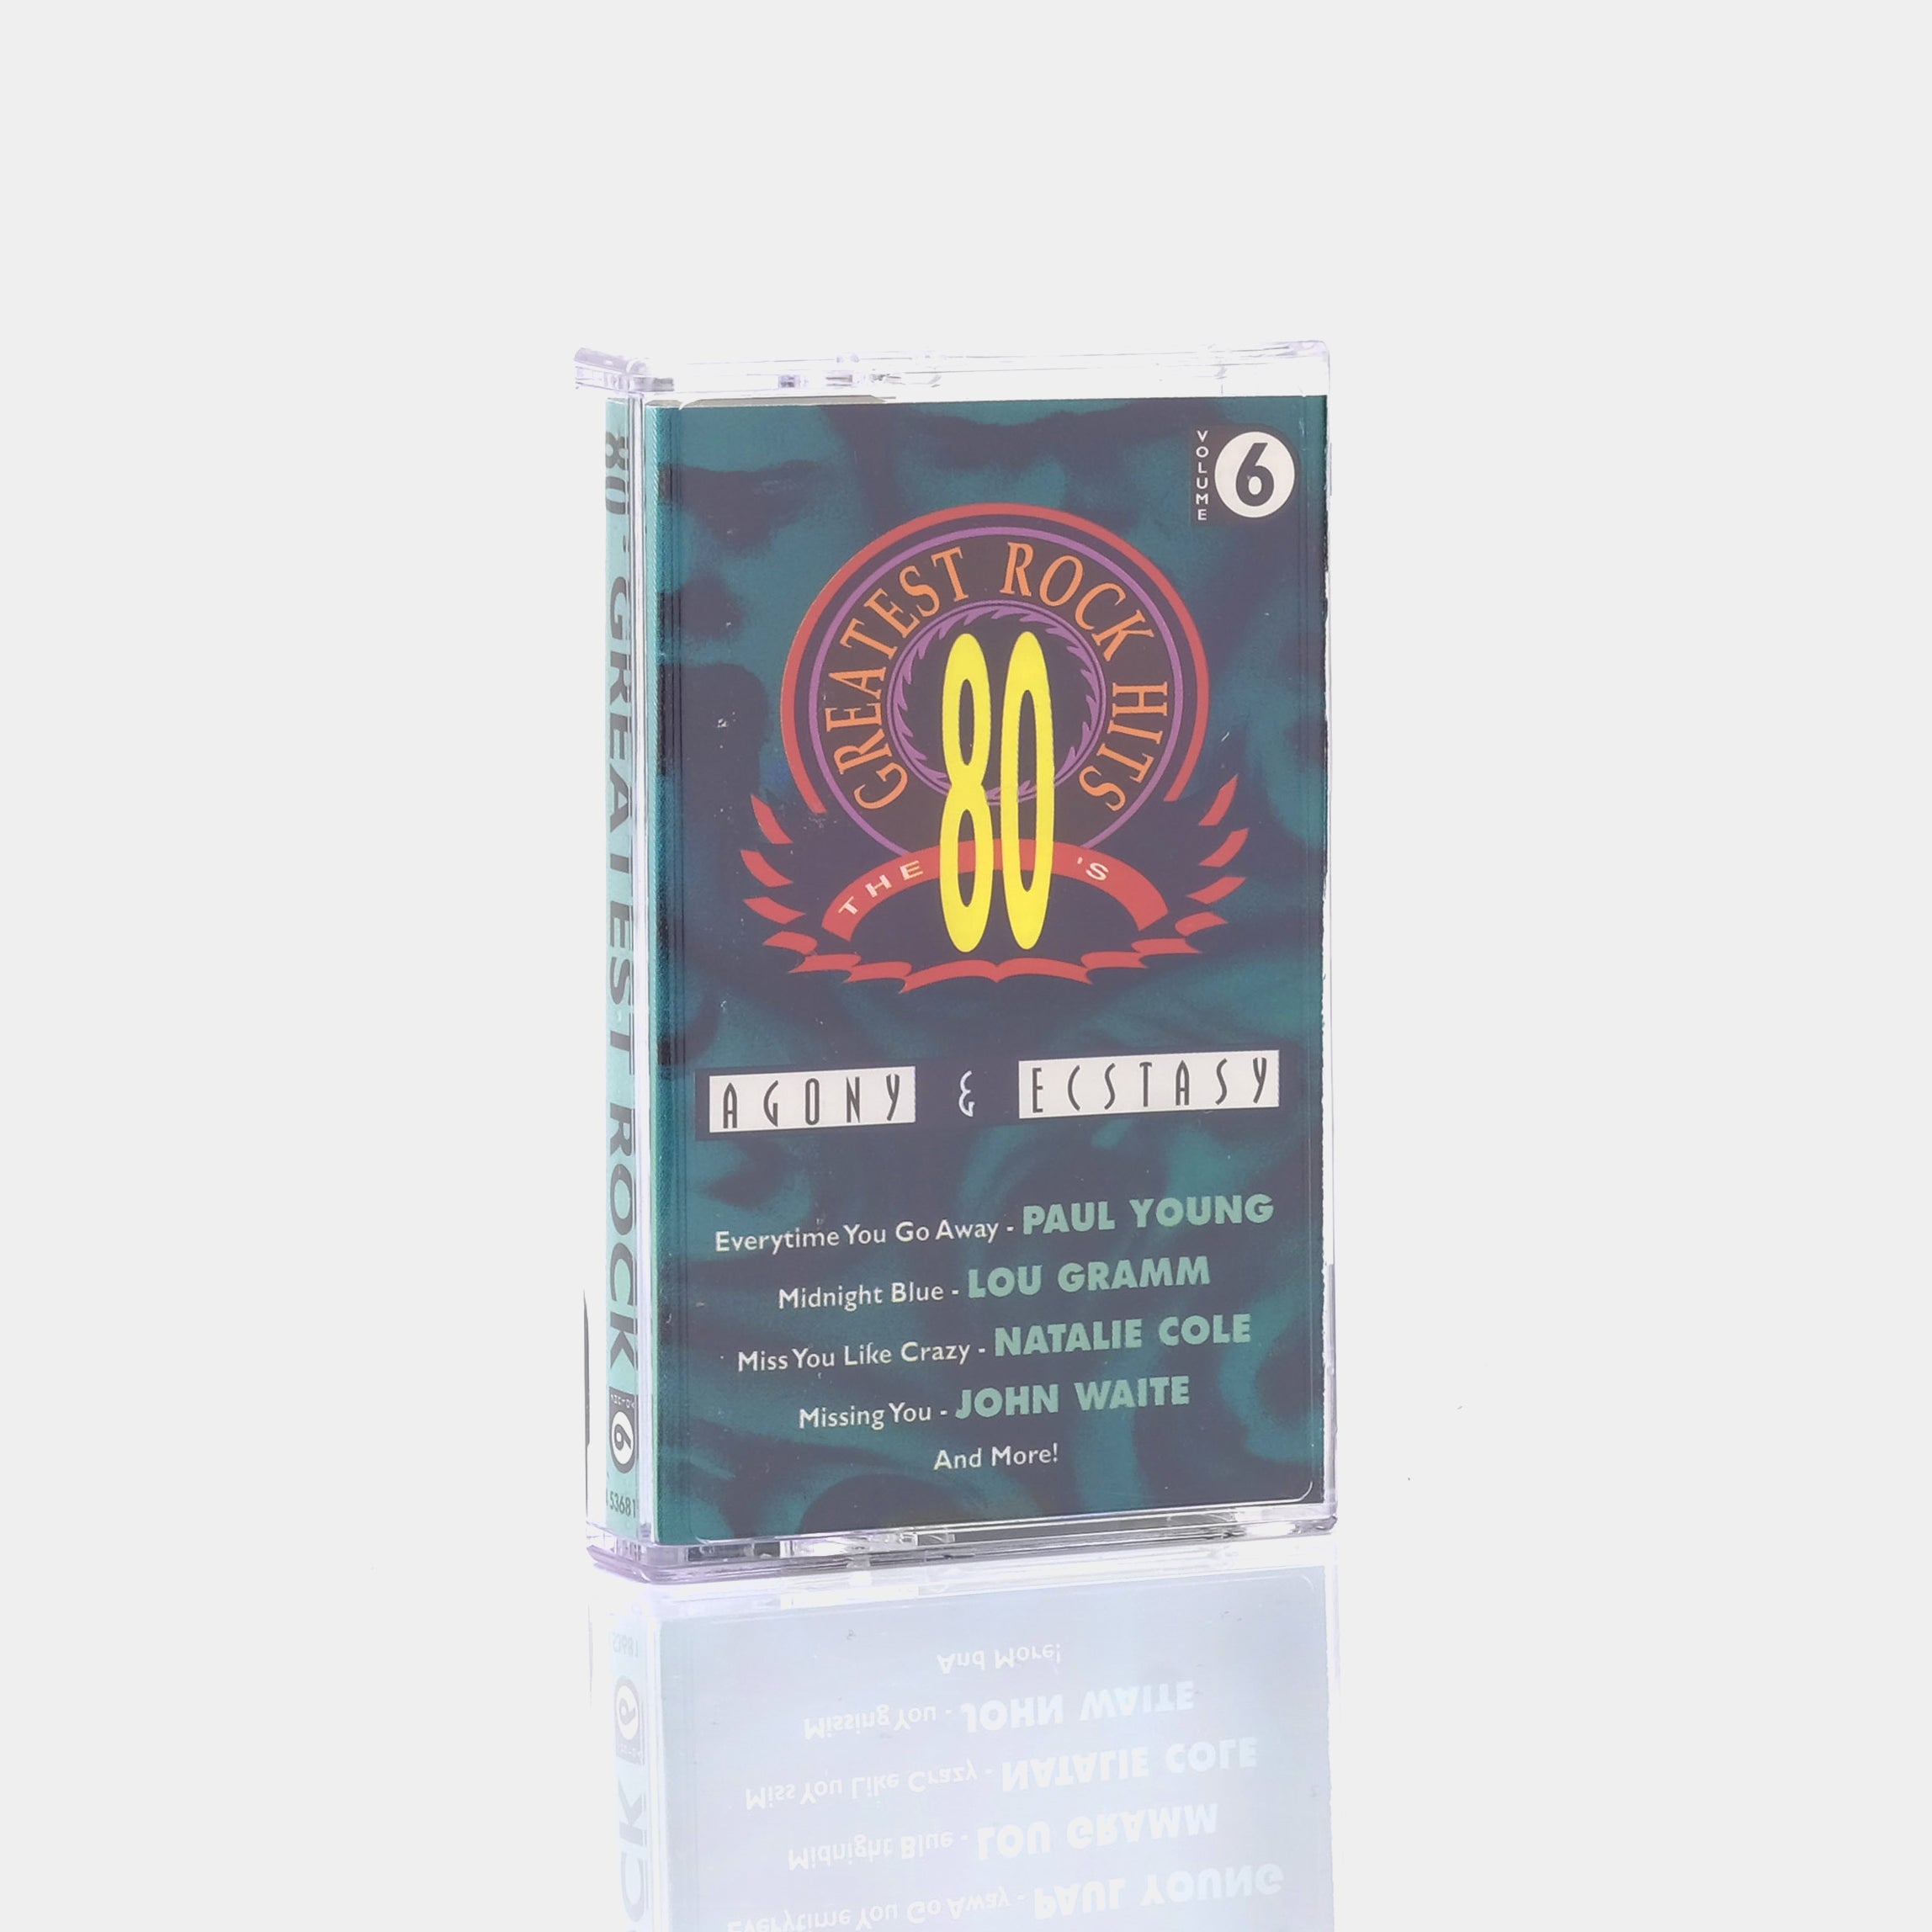 The 80's Greatest Rock Hits Volume 6 Cassette Tape